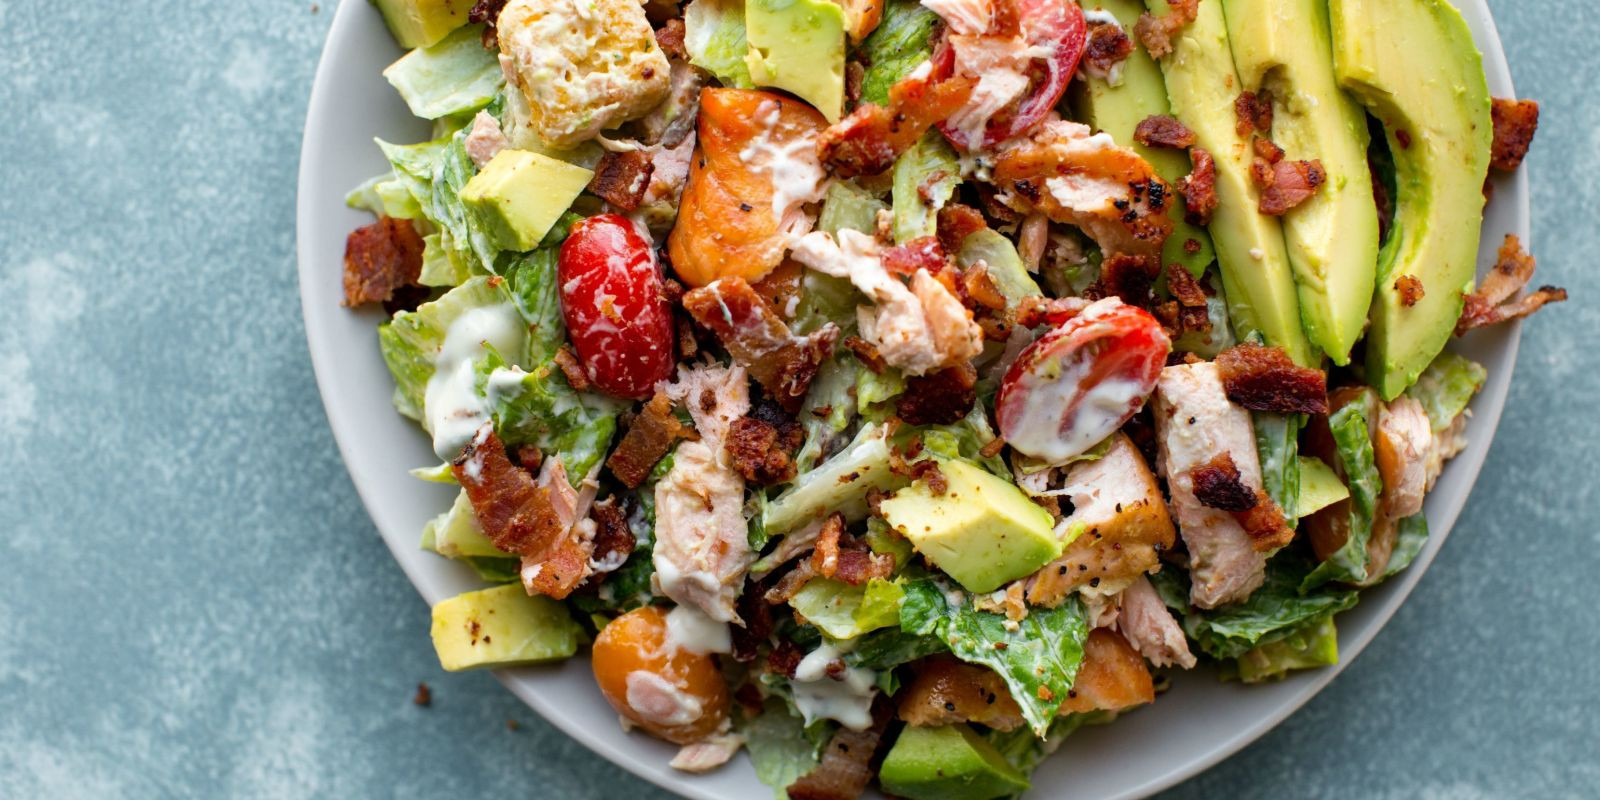 Healthy Easy Salads
 100 Easy Summer Salad Recipes Healthy Salad Ideas for